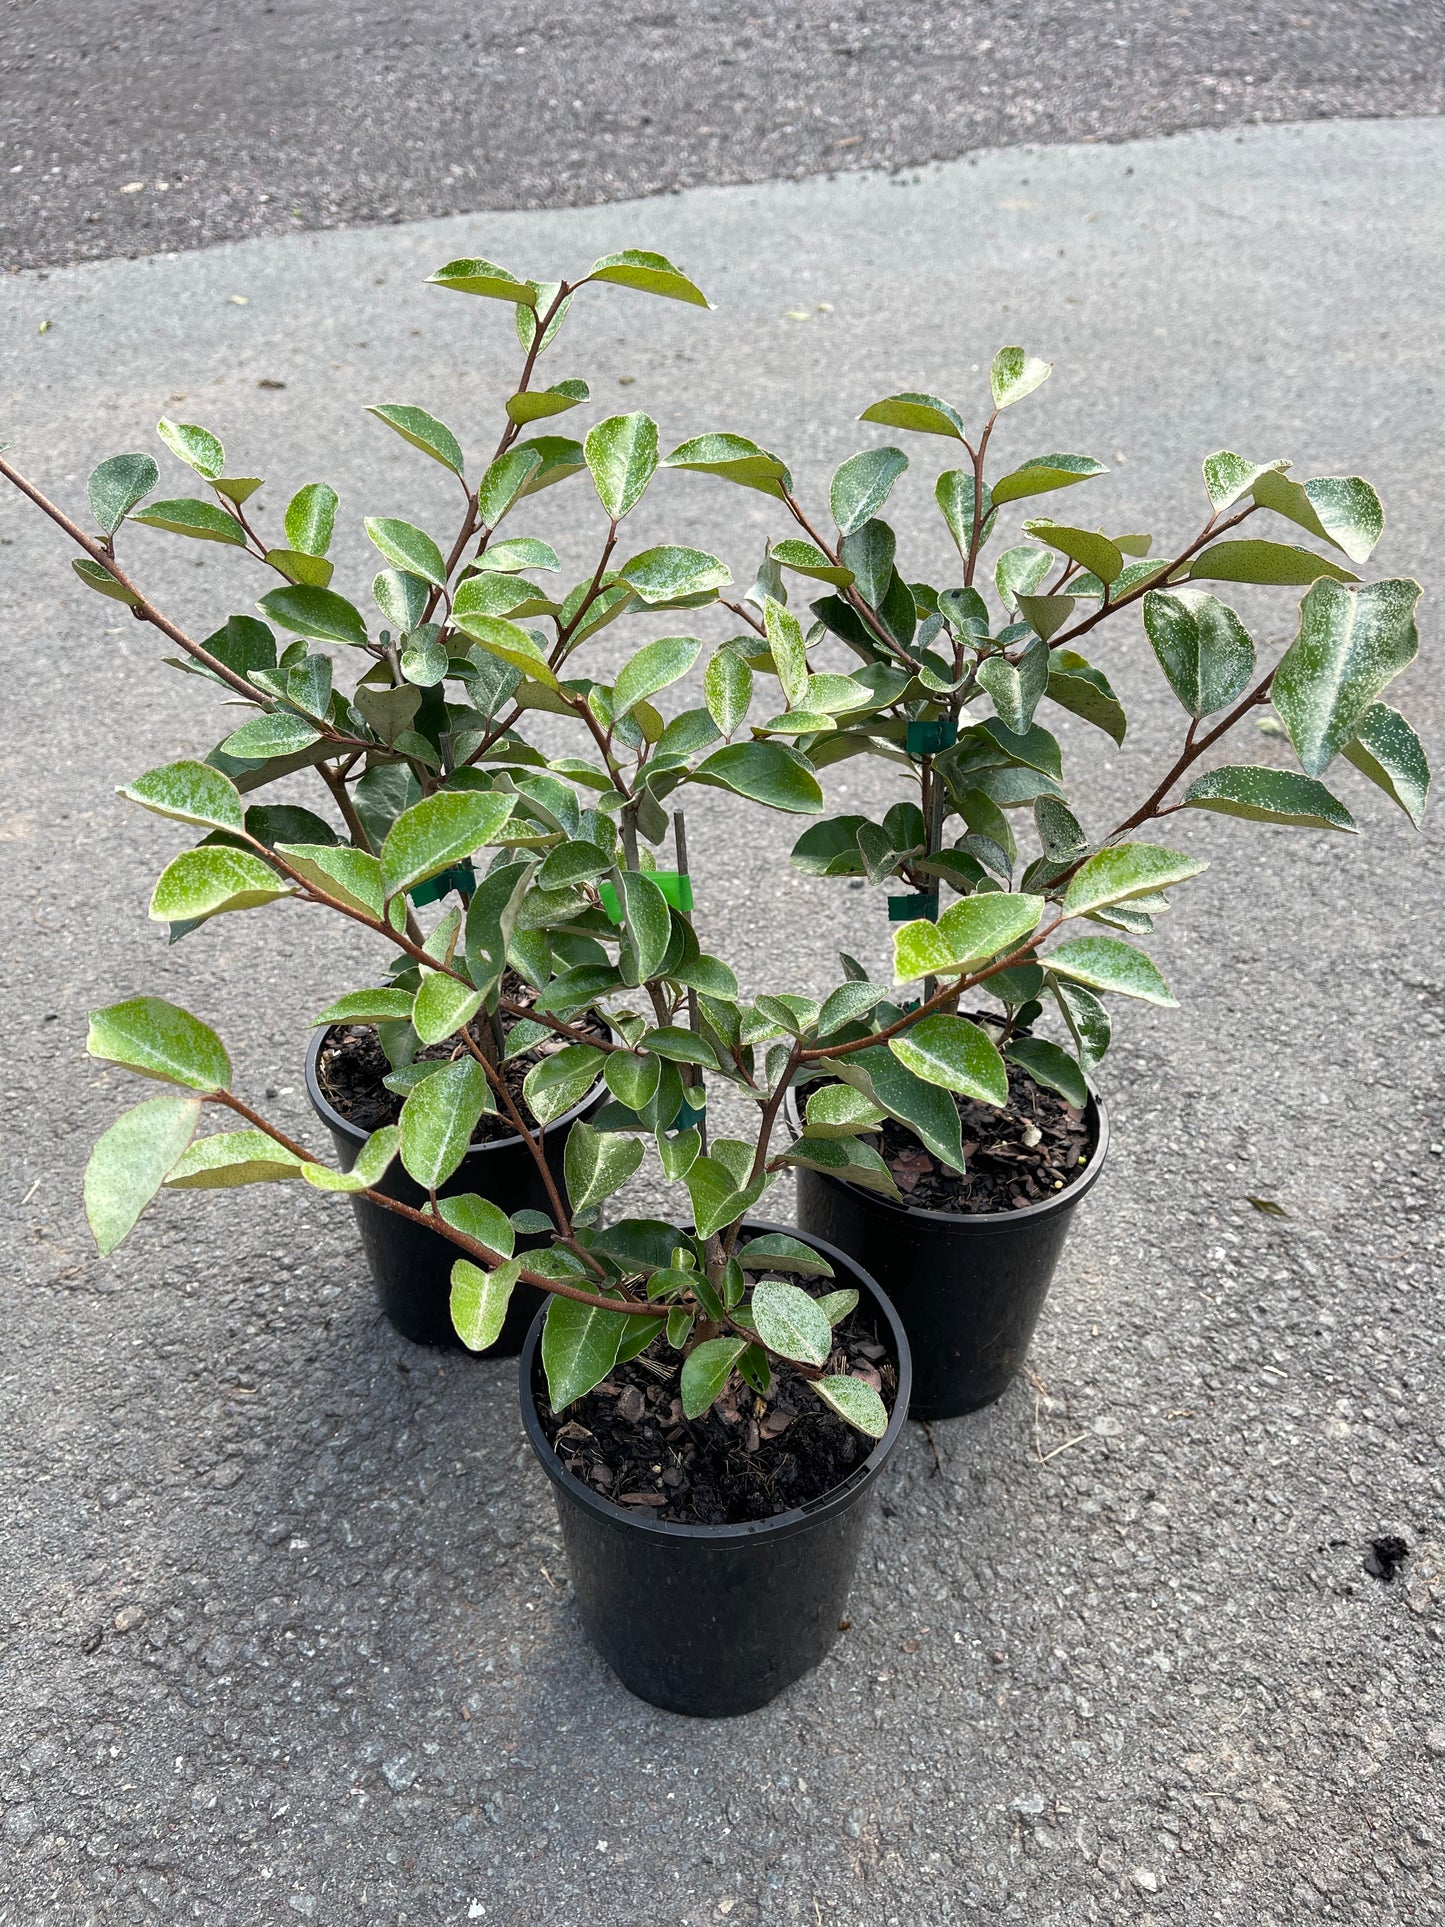 Elaeagnus Macrophylla - Silver Berry